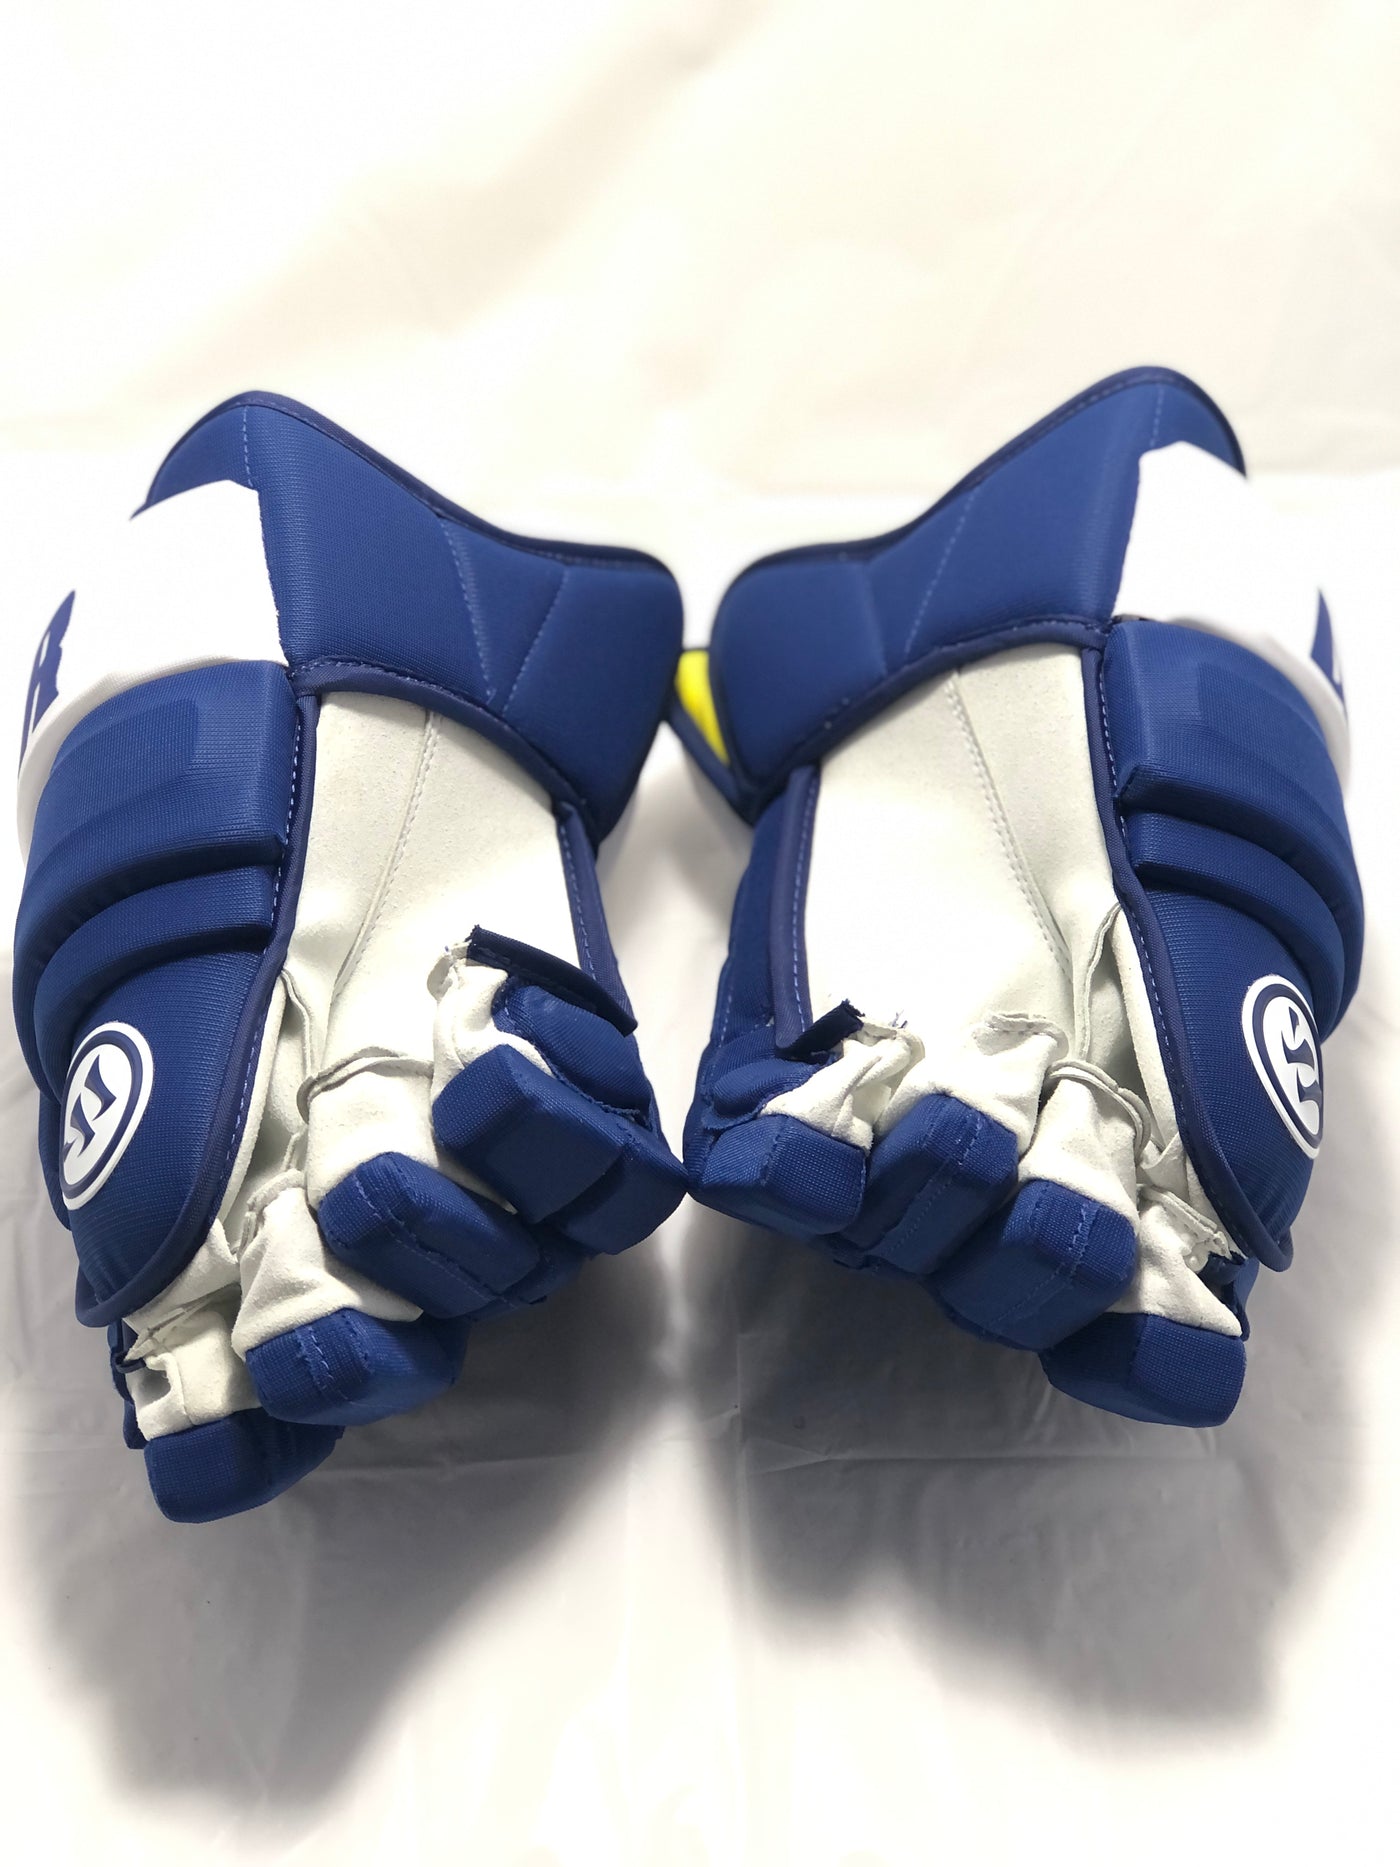 Warrior Franchise AX1 Toronto Maple Leafs Hockey Gloves